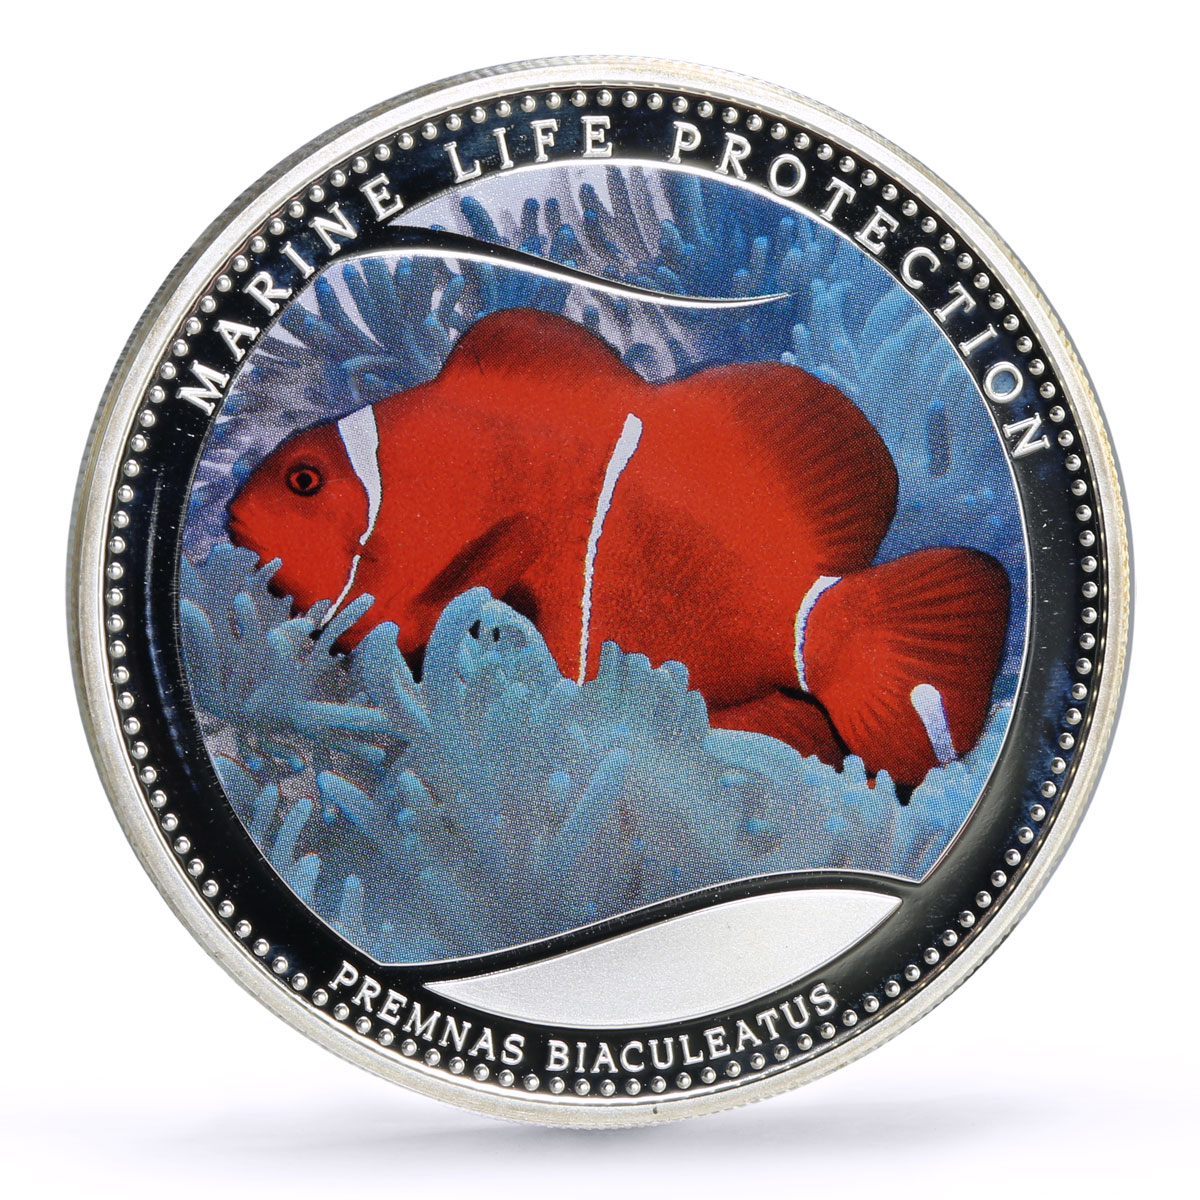 Palau 5 dollars Marine Life Protection Clownfish Fauna proof silver coin 2011